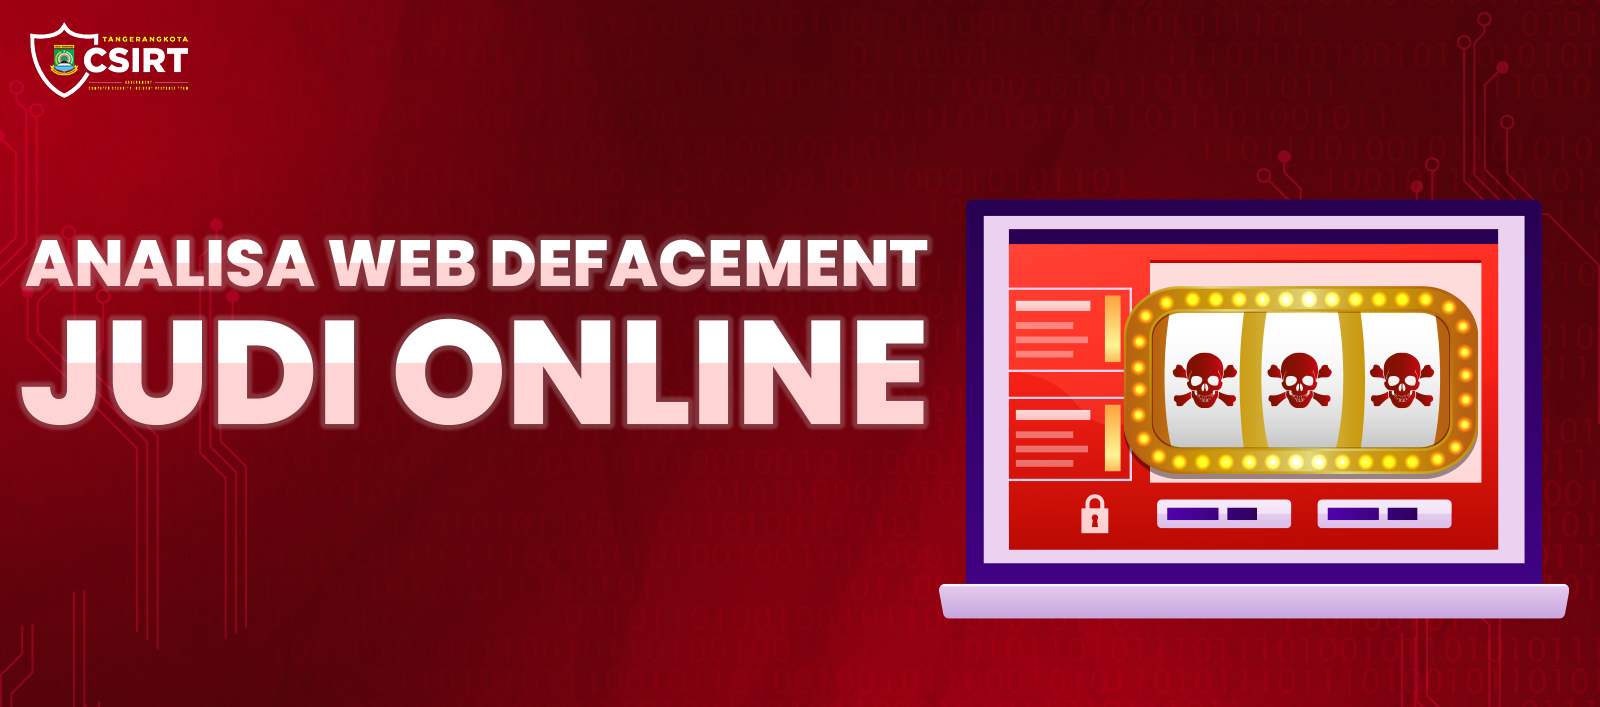 Analisa Web Defacement Judi Online